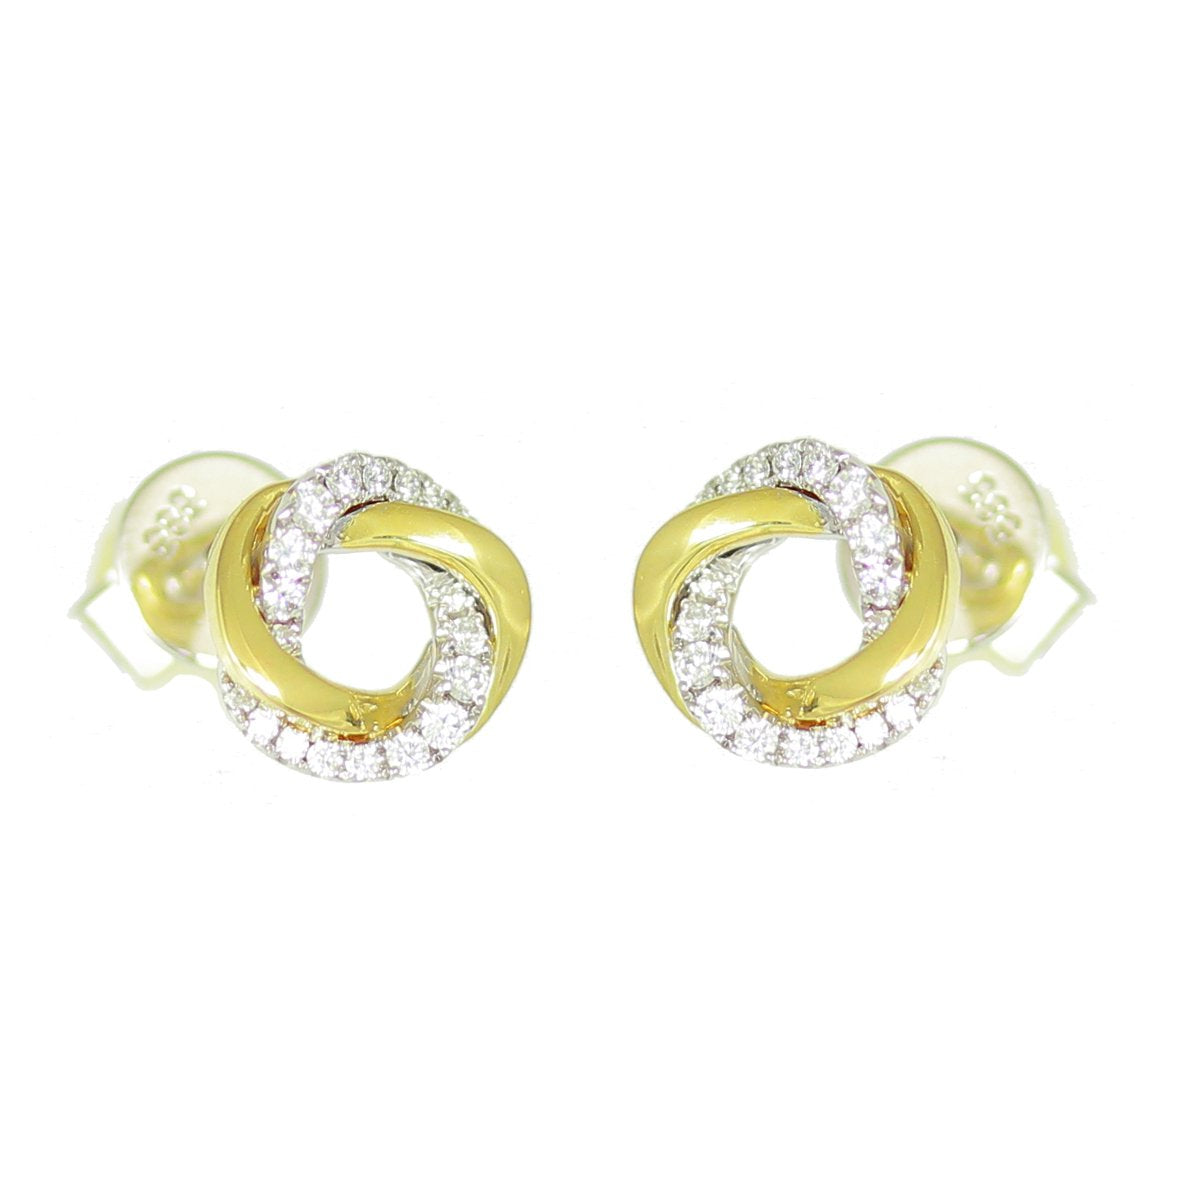 frederic sage diamond studs yellow gold earrings e2242-yw stud earrings